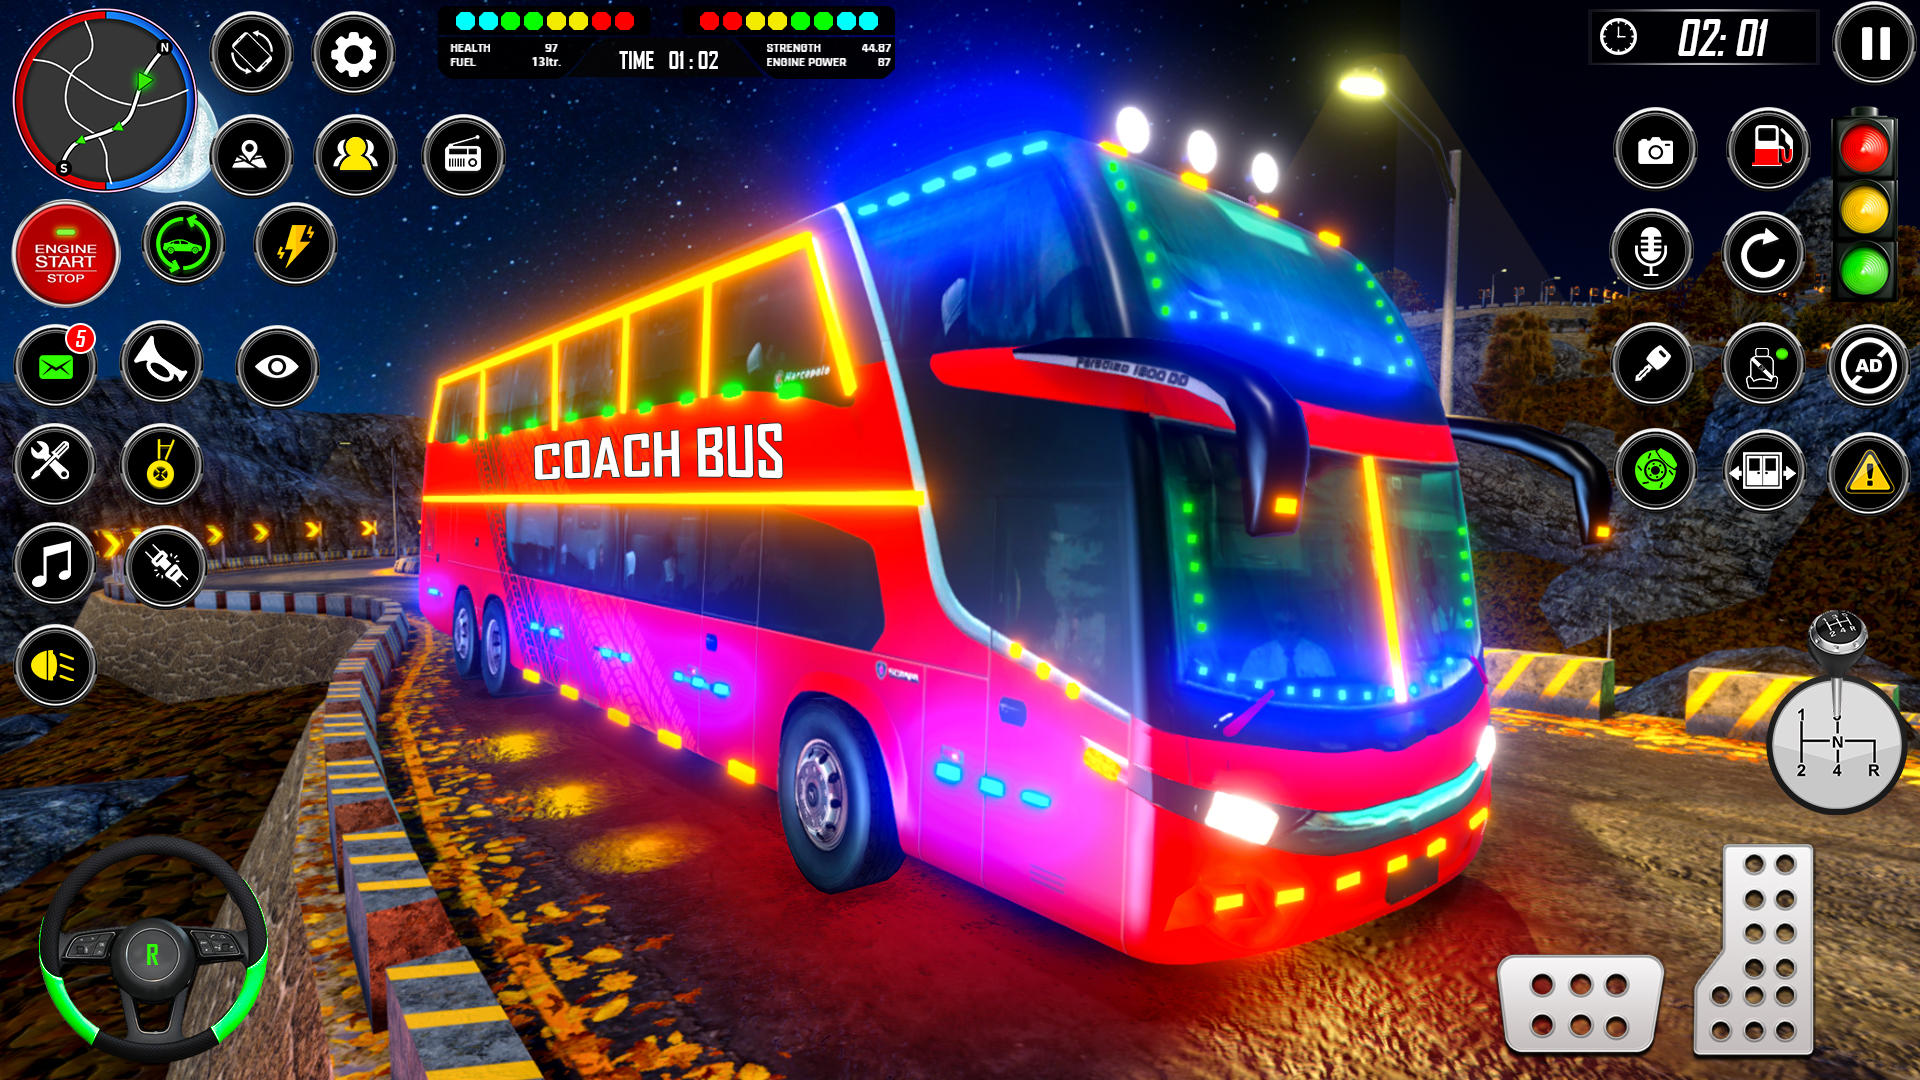 Screenshot 1 of juegos de autobuses 3.6